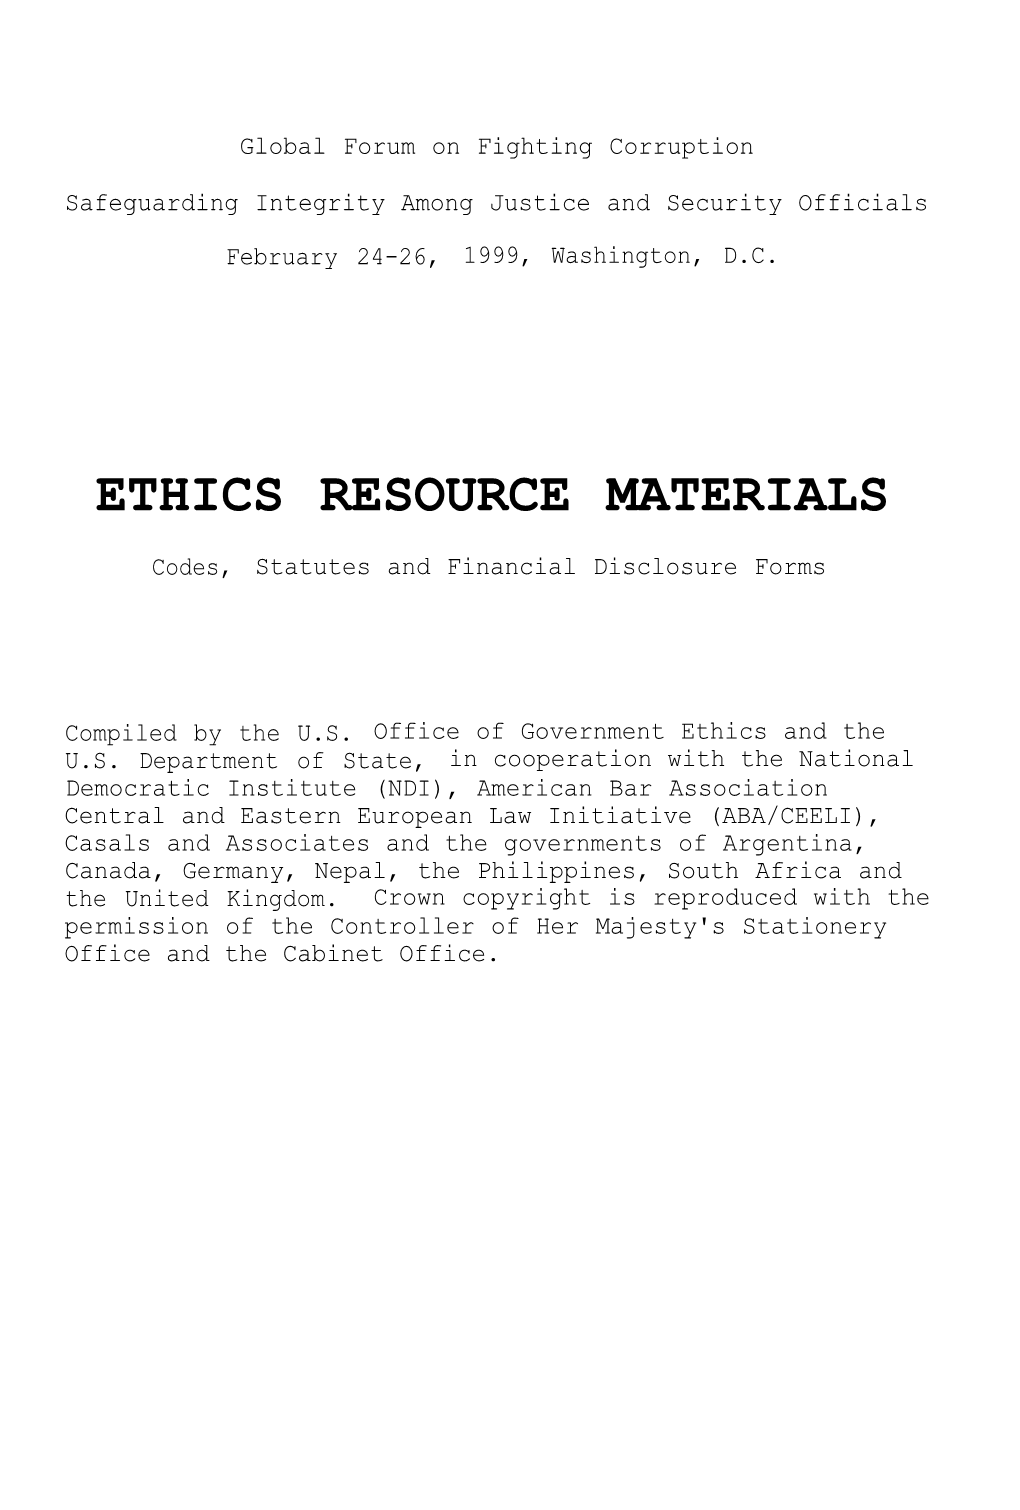 Ethics Resource Materials